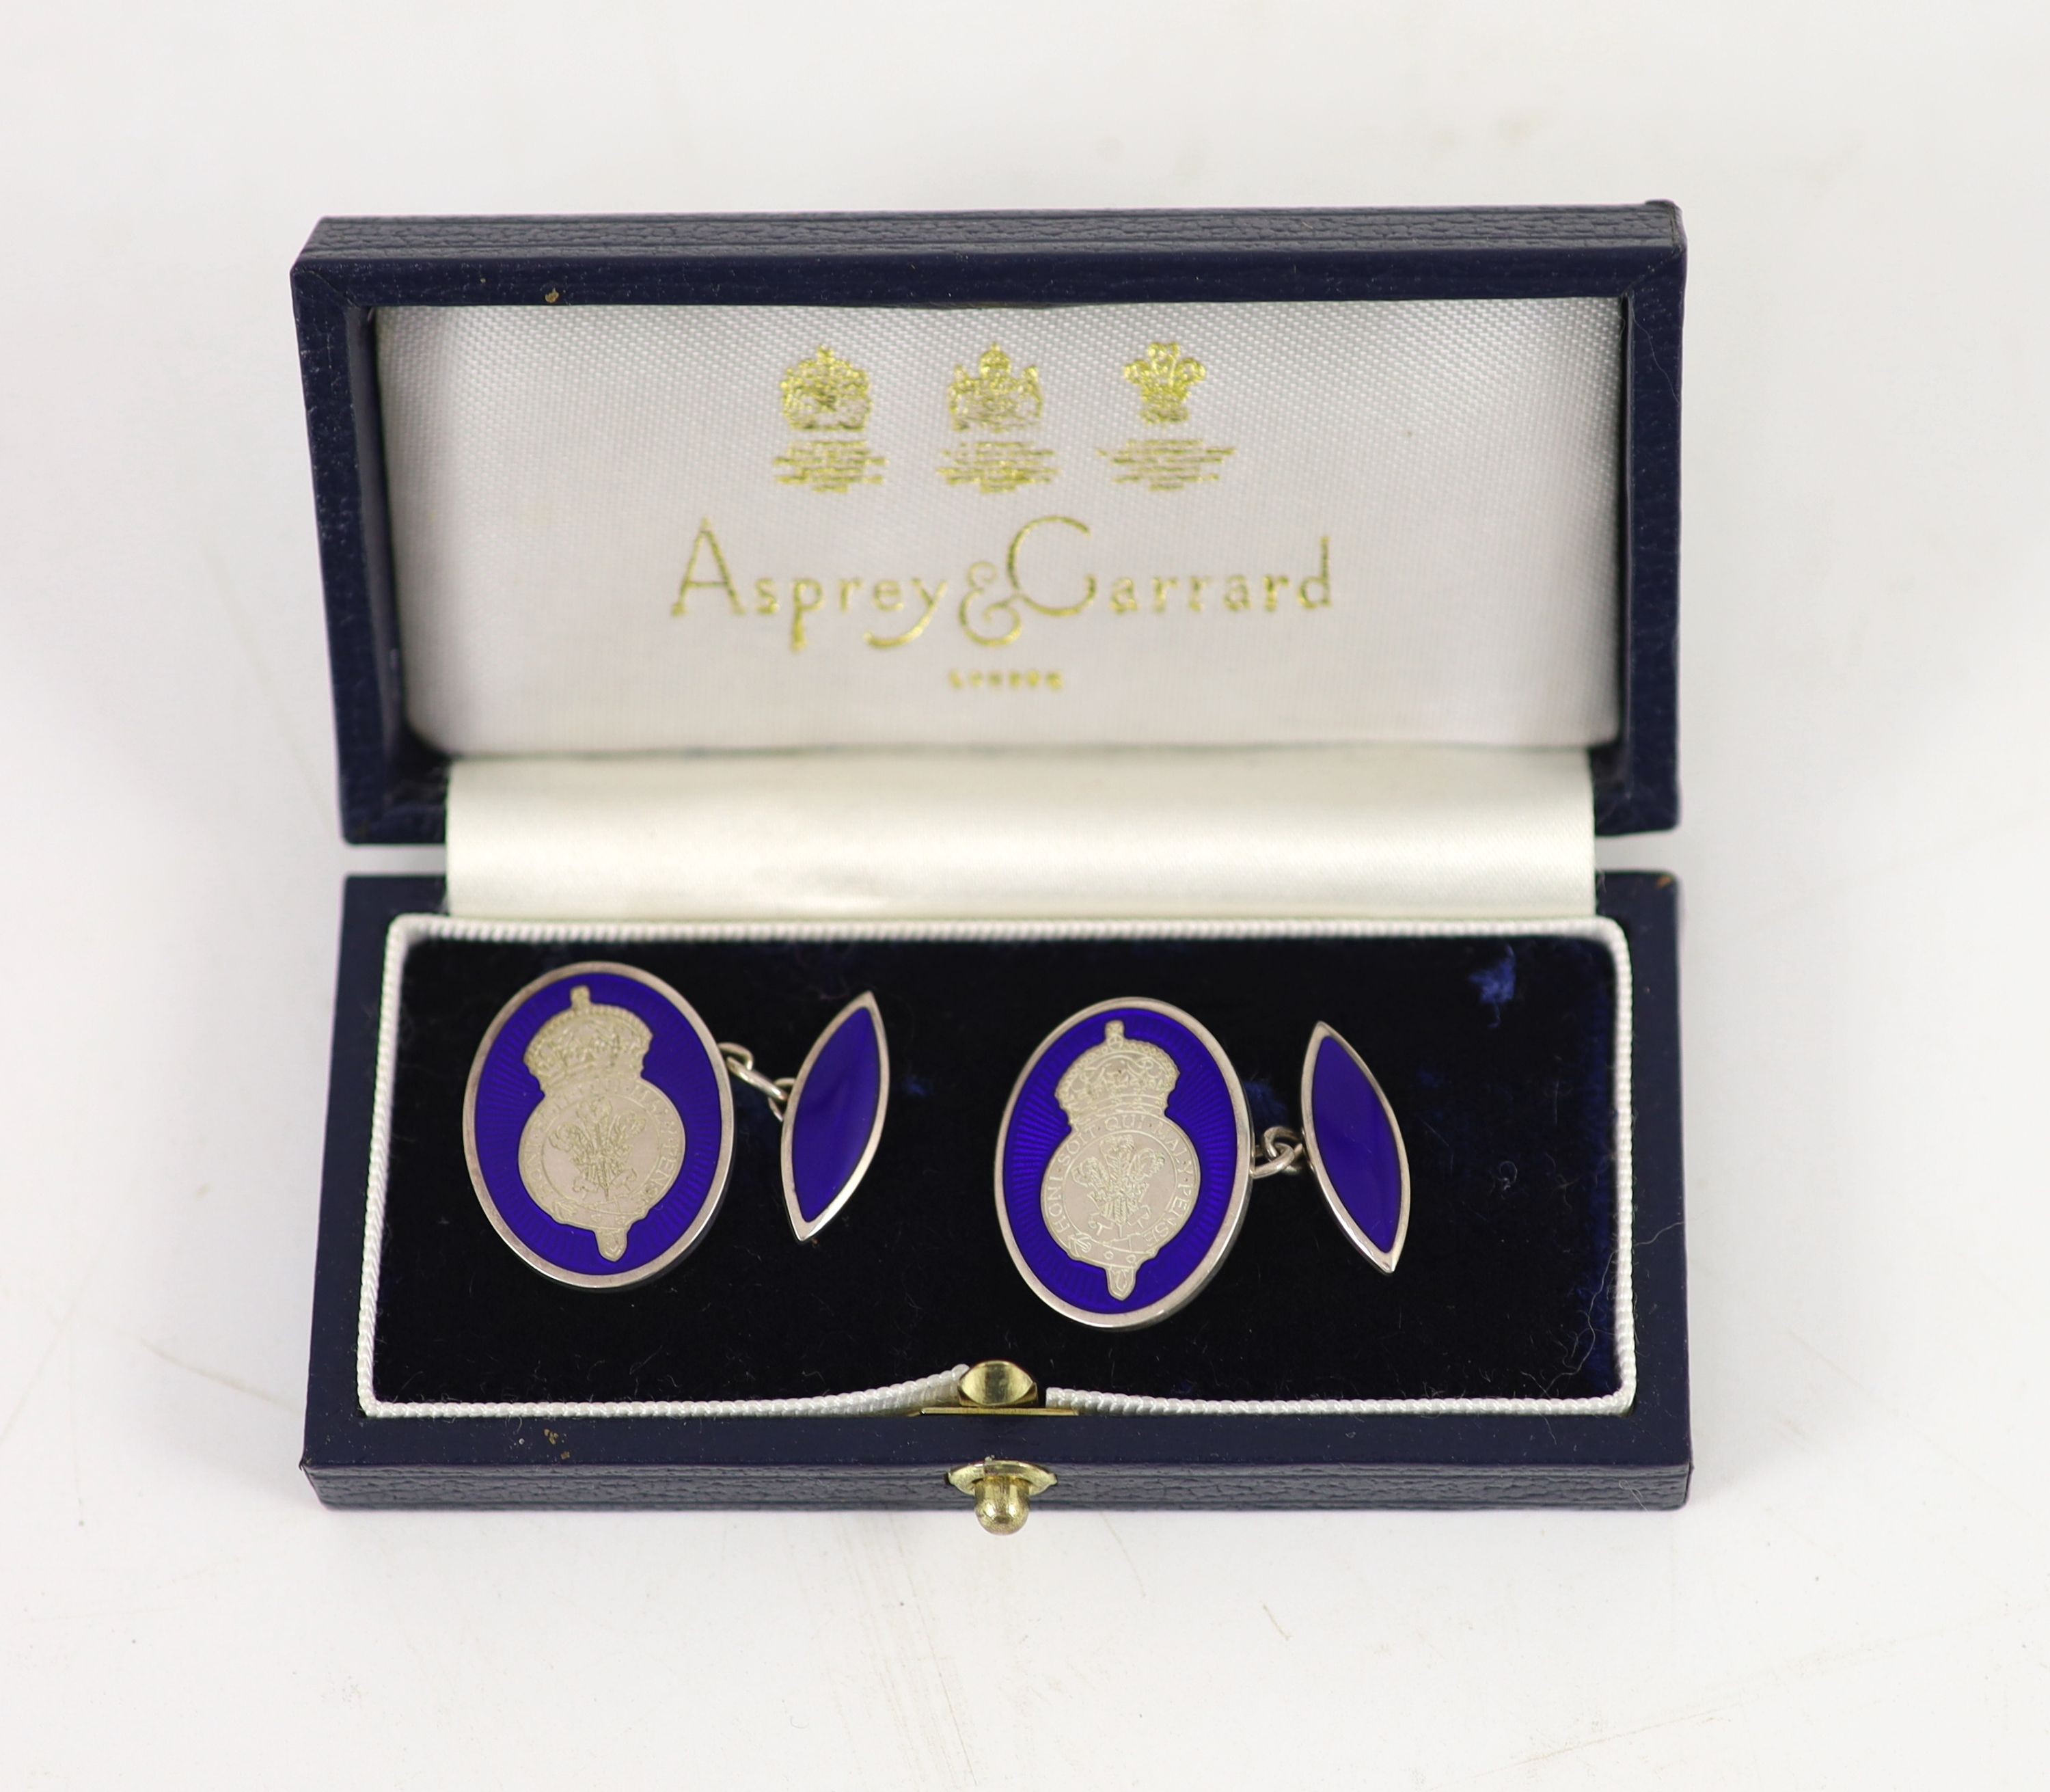 A pair of Asprey and Garrard silver and blue enamel ‘’Prince of Wales’’ presentation cufflinks, London, 1998.